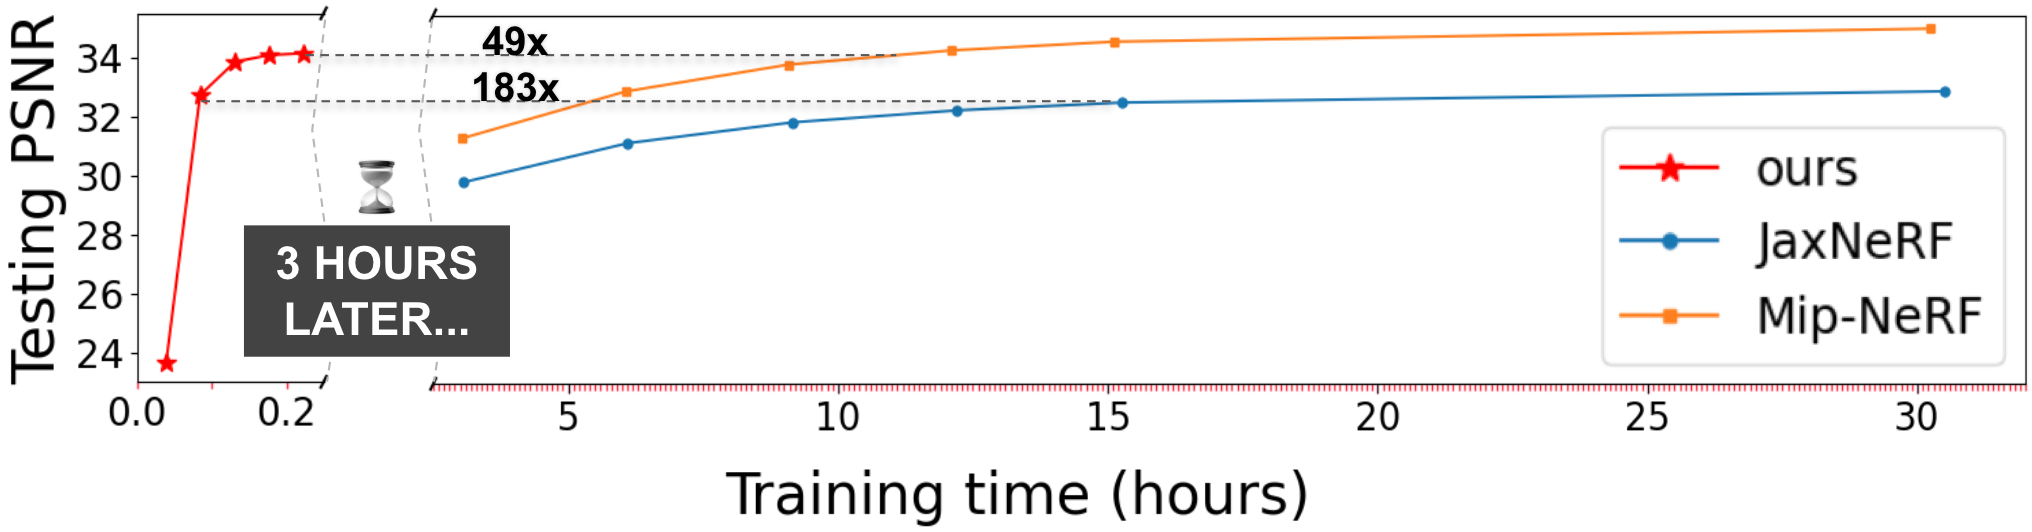 training time comparison